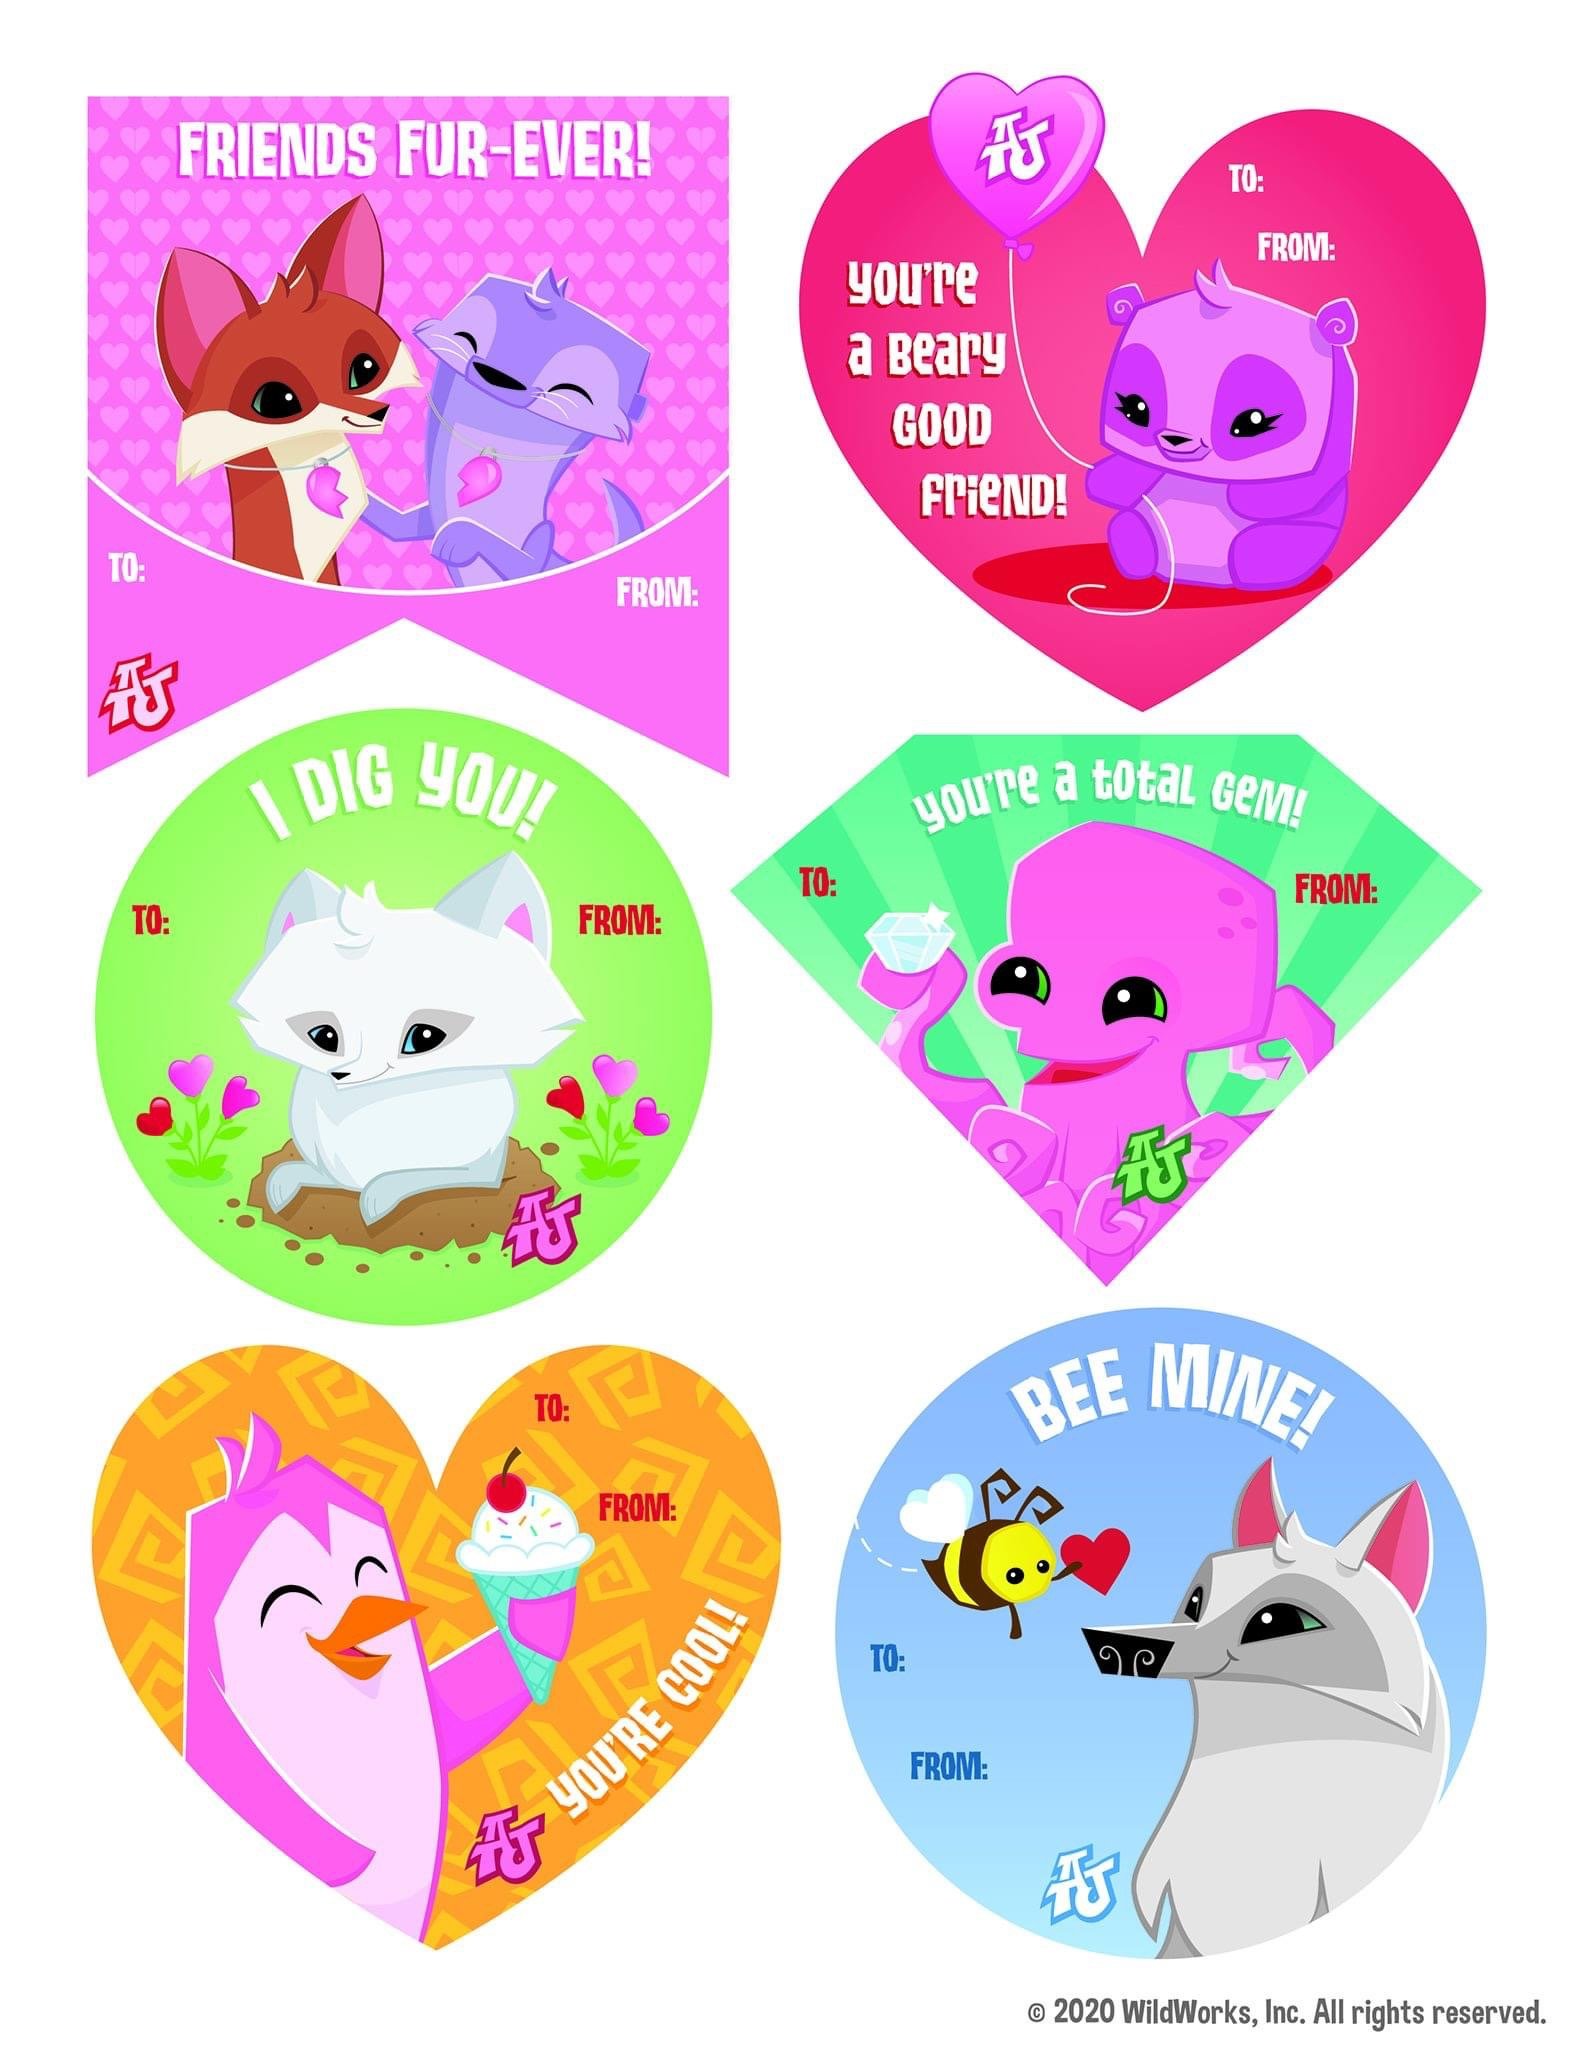 6 Animal Jam Friendship Cards.JPG